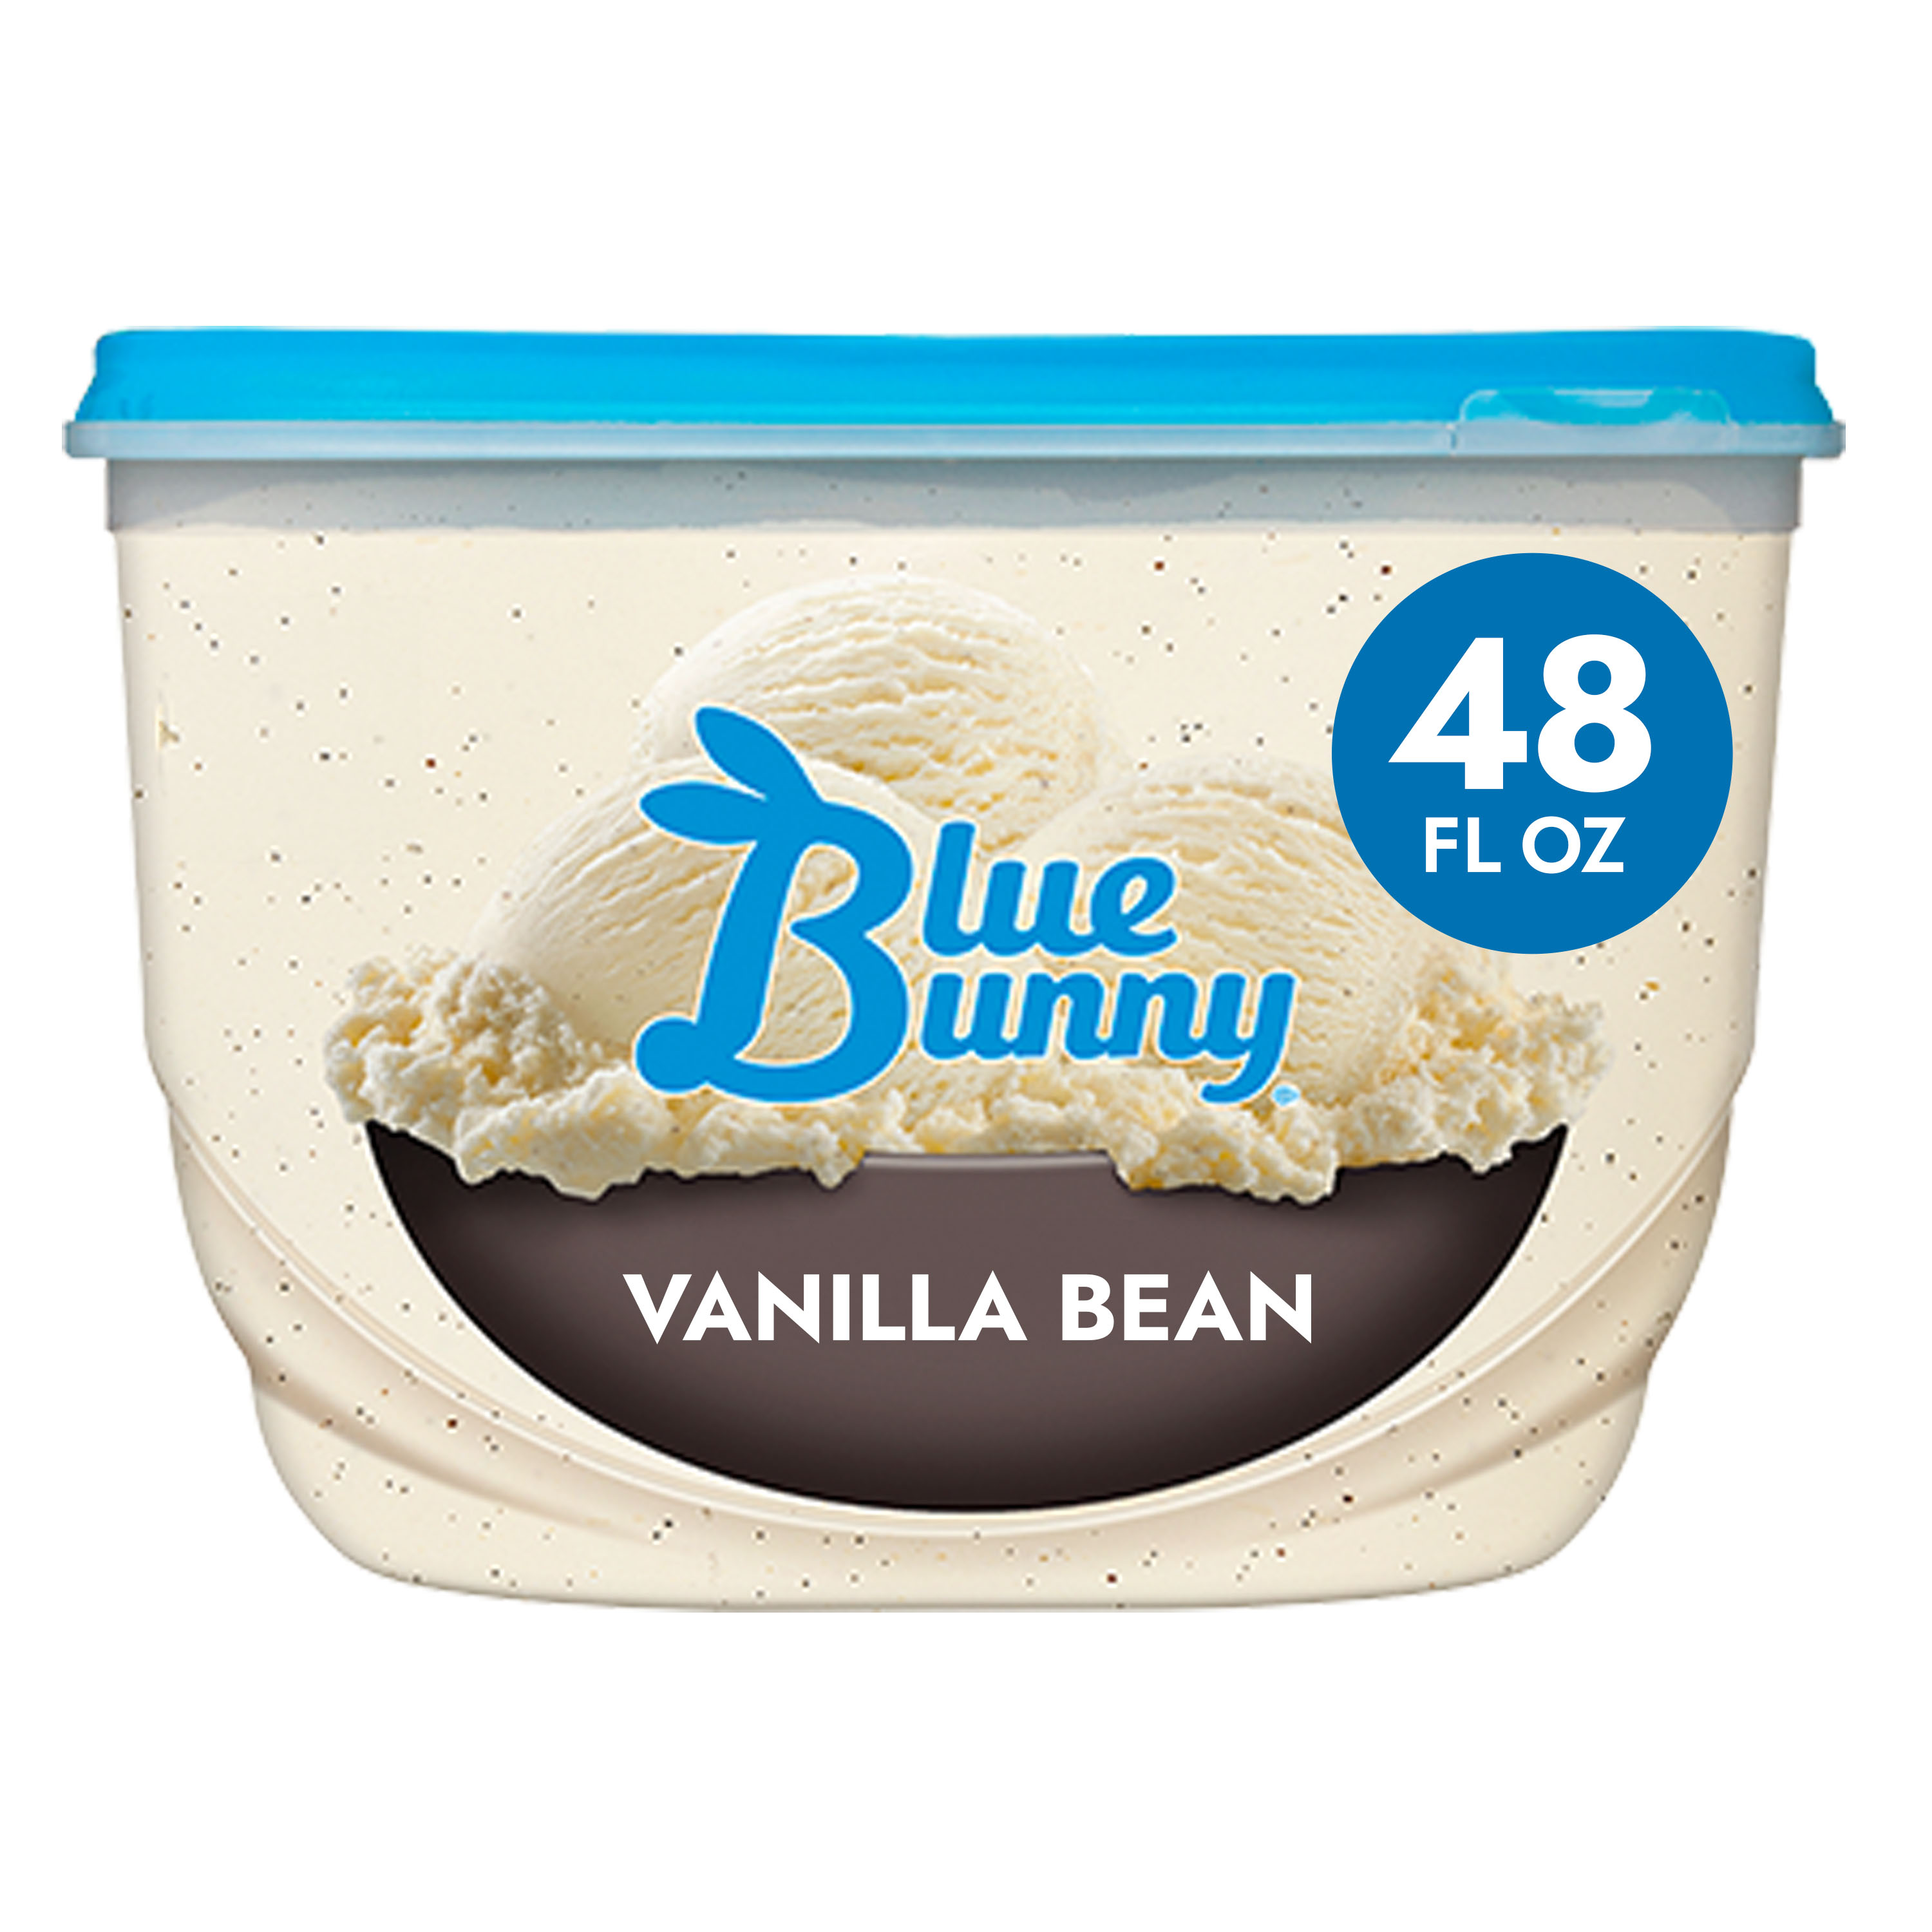 Blue Bunny Vanilla Bean Ice Cream, 48 fl oz - image 2 of 8